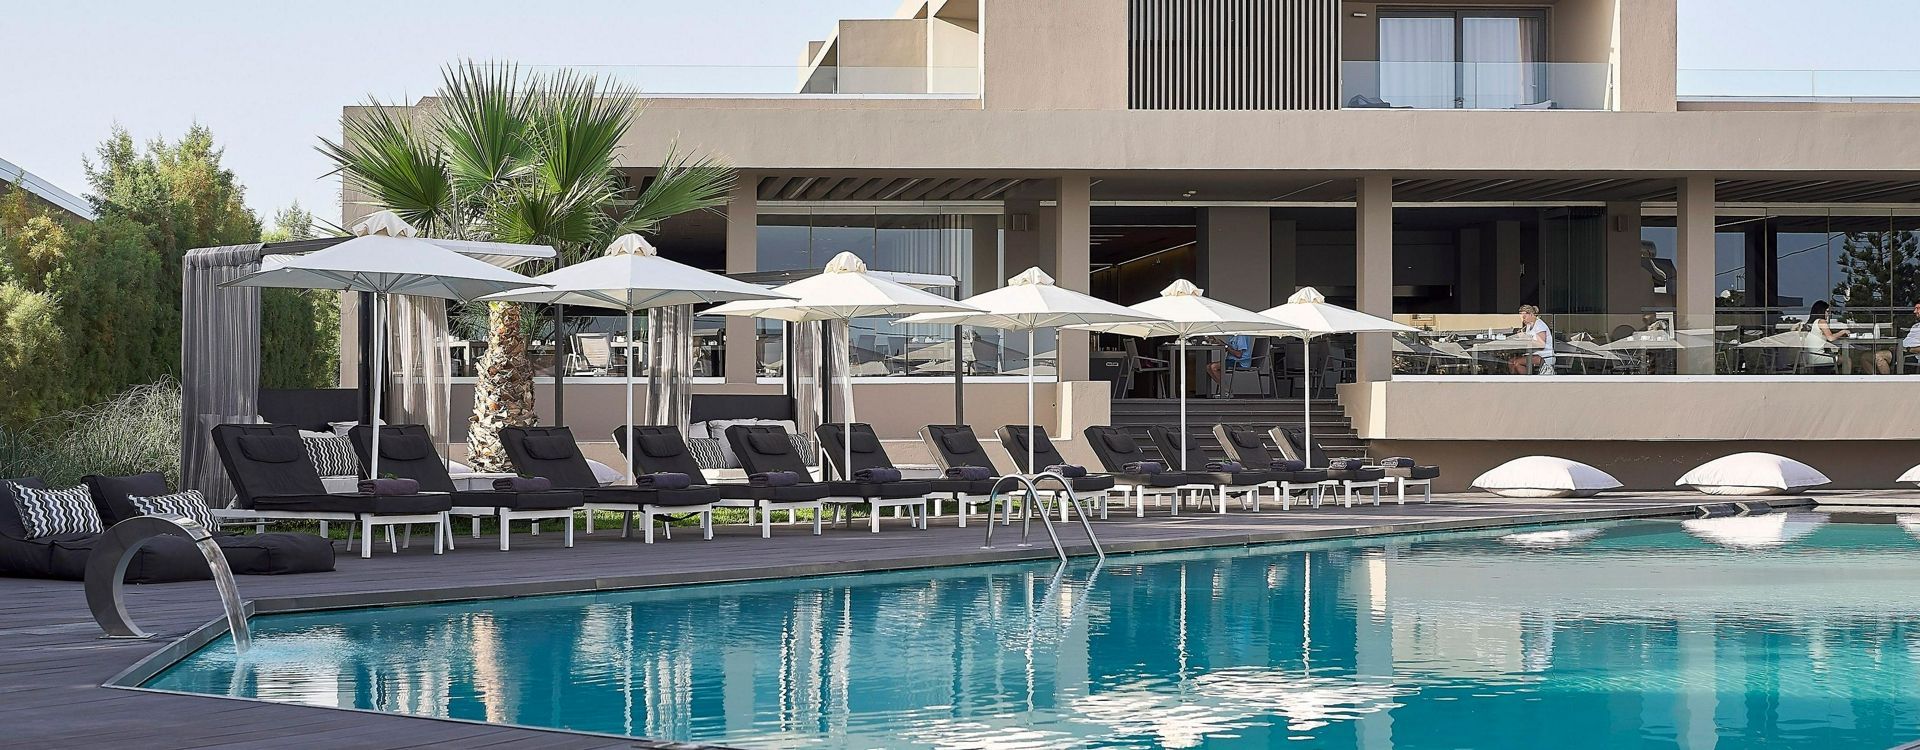 NEMA Design Hotel & Spa-Pool (1).jpg